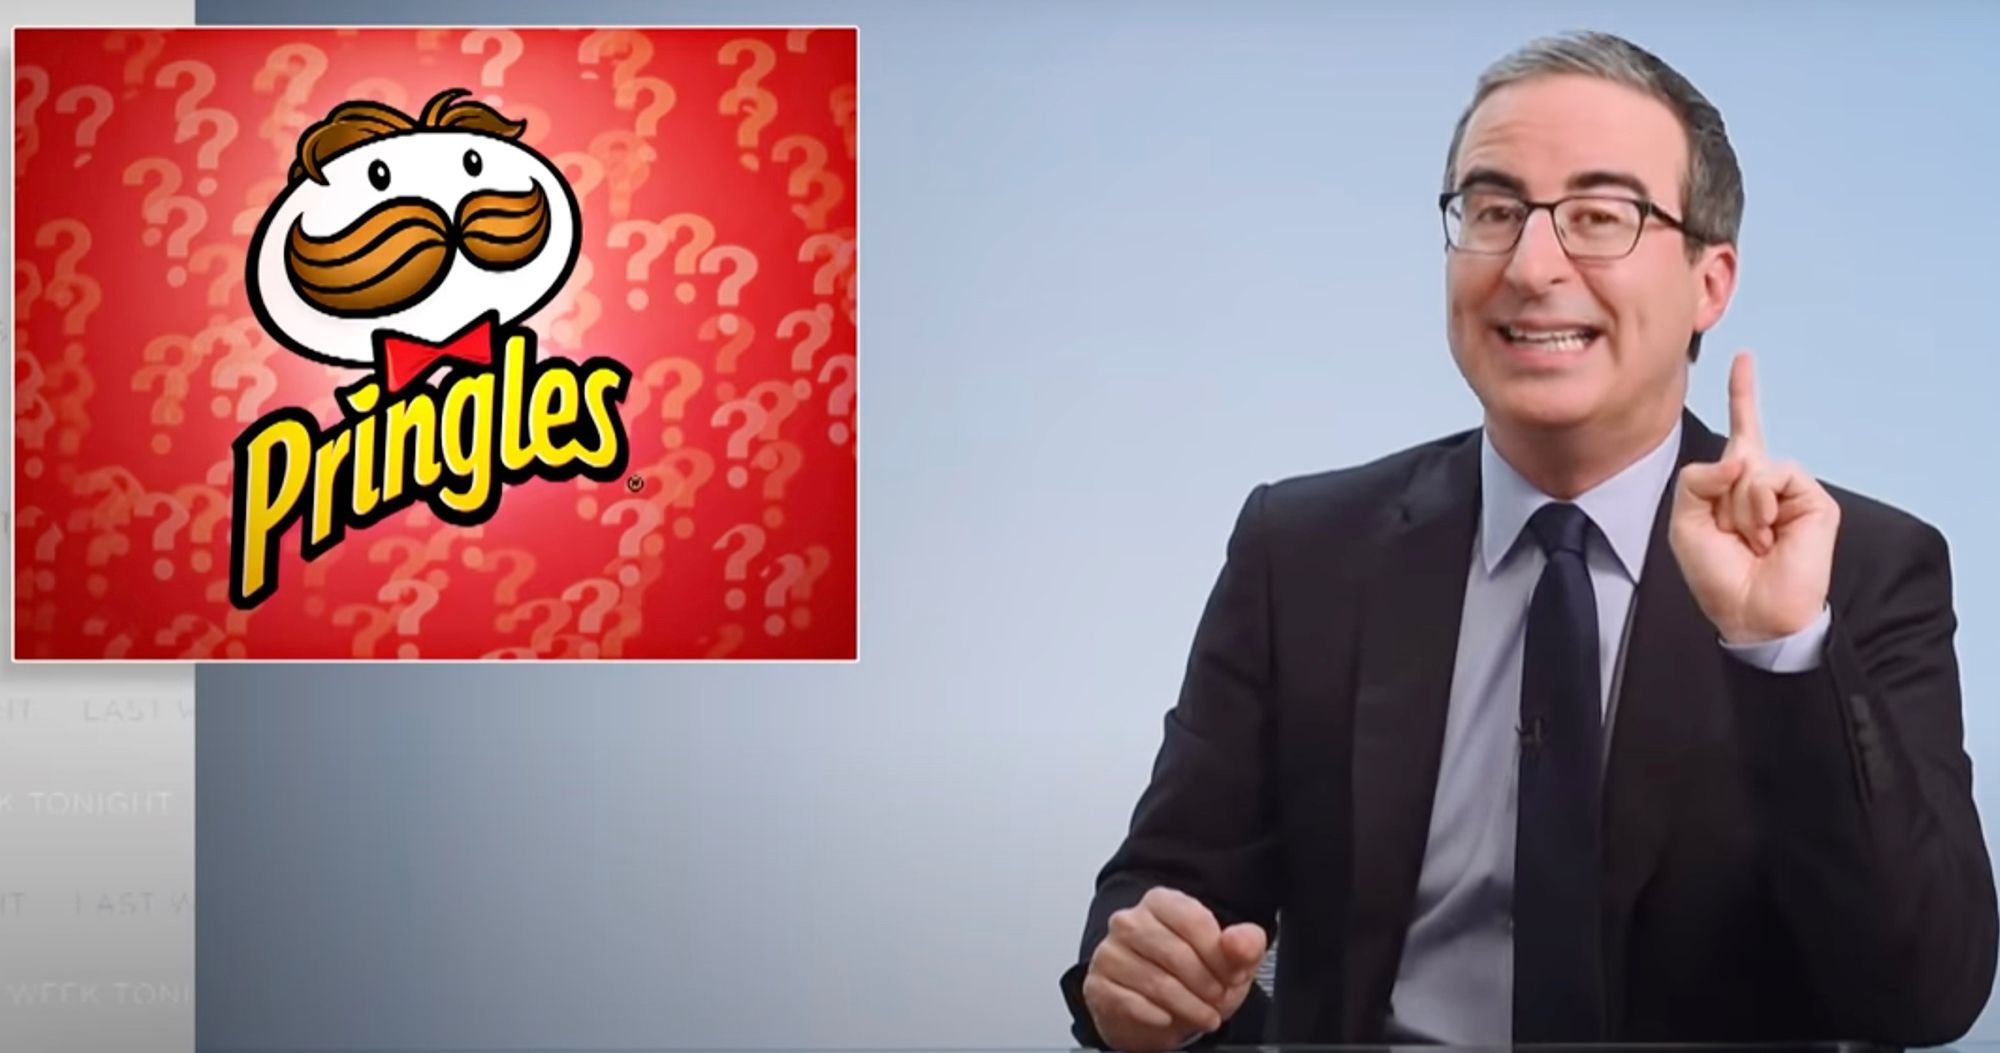 Full Pringles Mascot Body Revealed After John Oliver Challenge for Charity